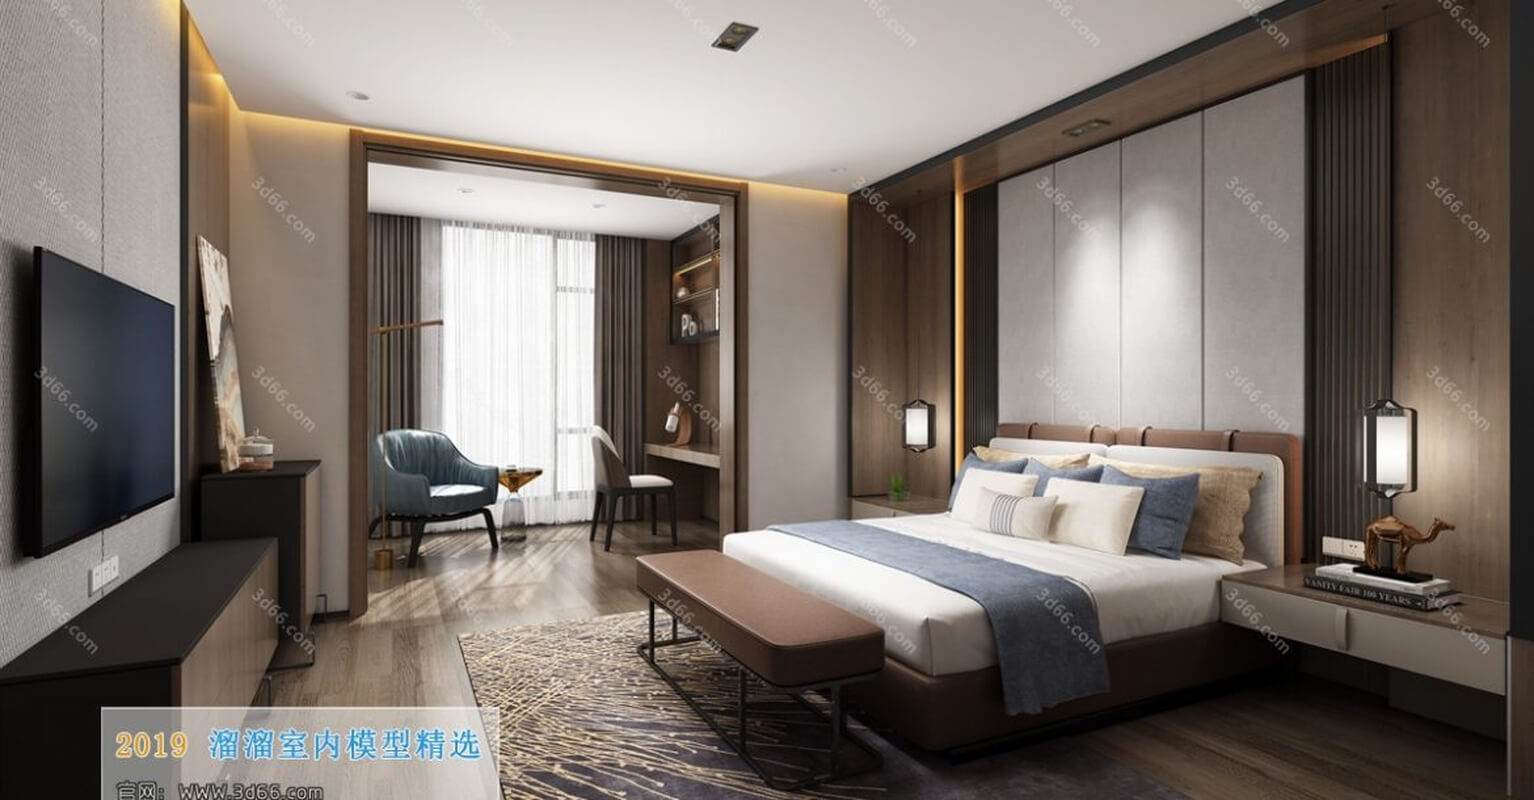 3D66 Hotel Suite Interior 2019 Style (01)